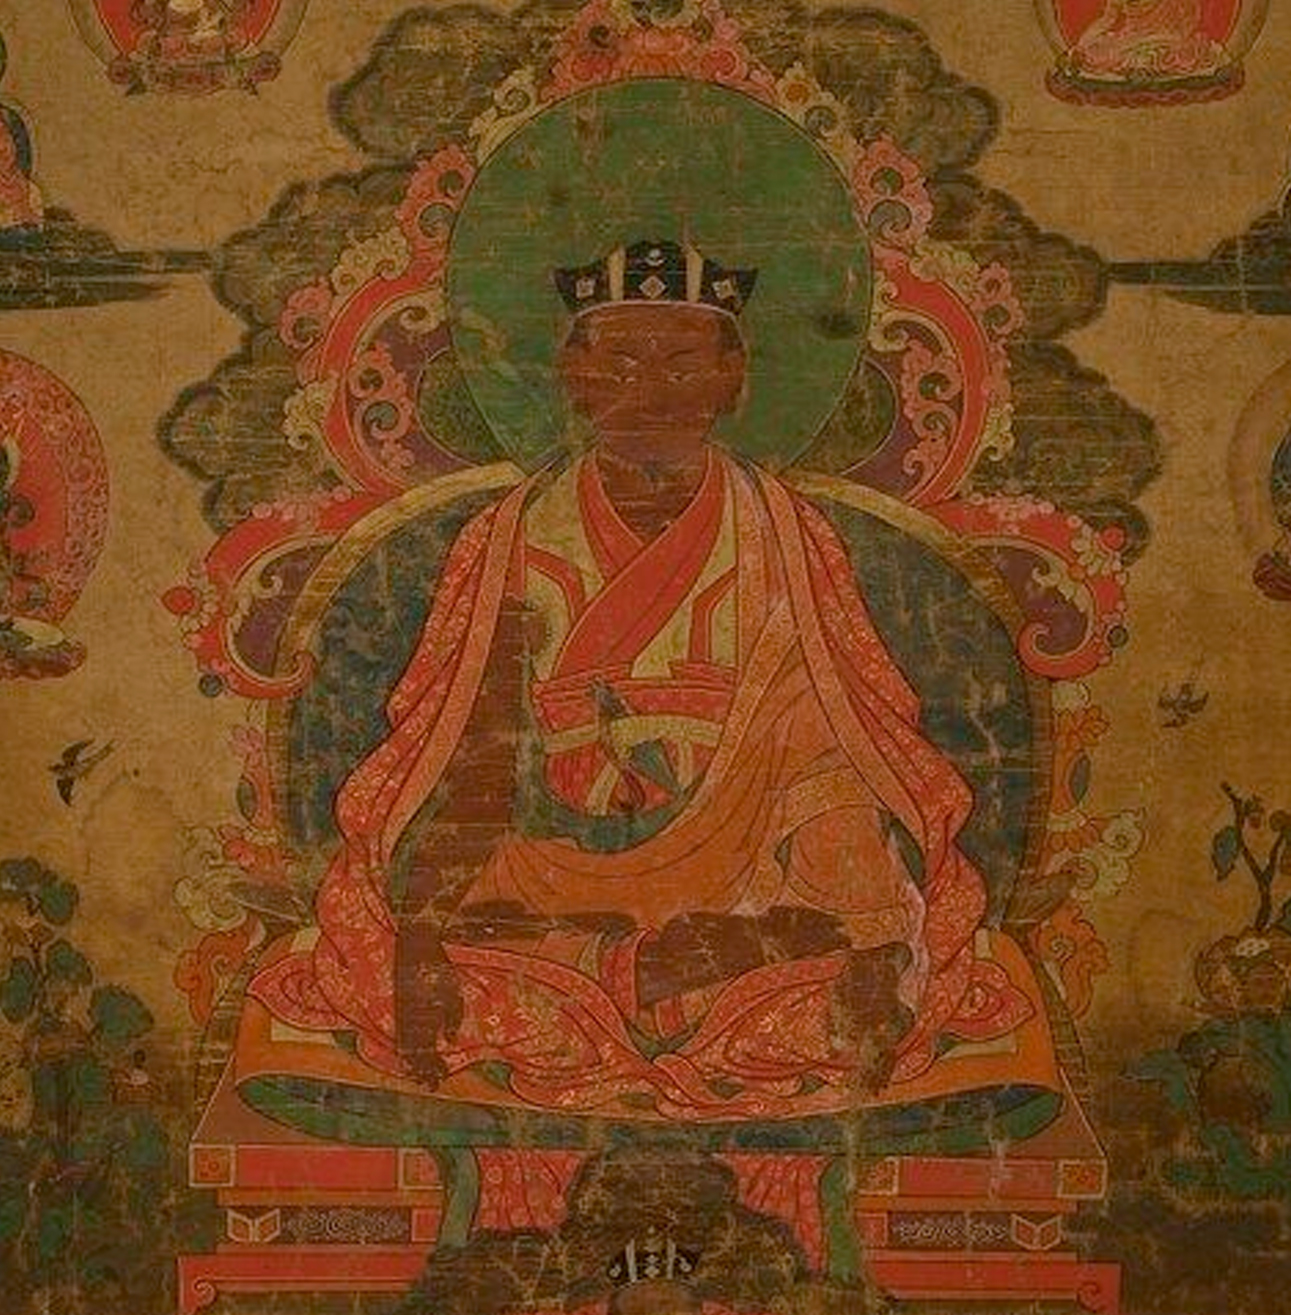 The 2nd Karmapa Karma Pakshi